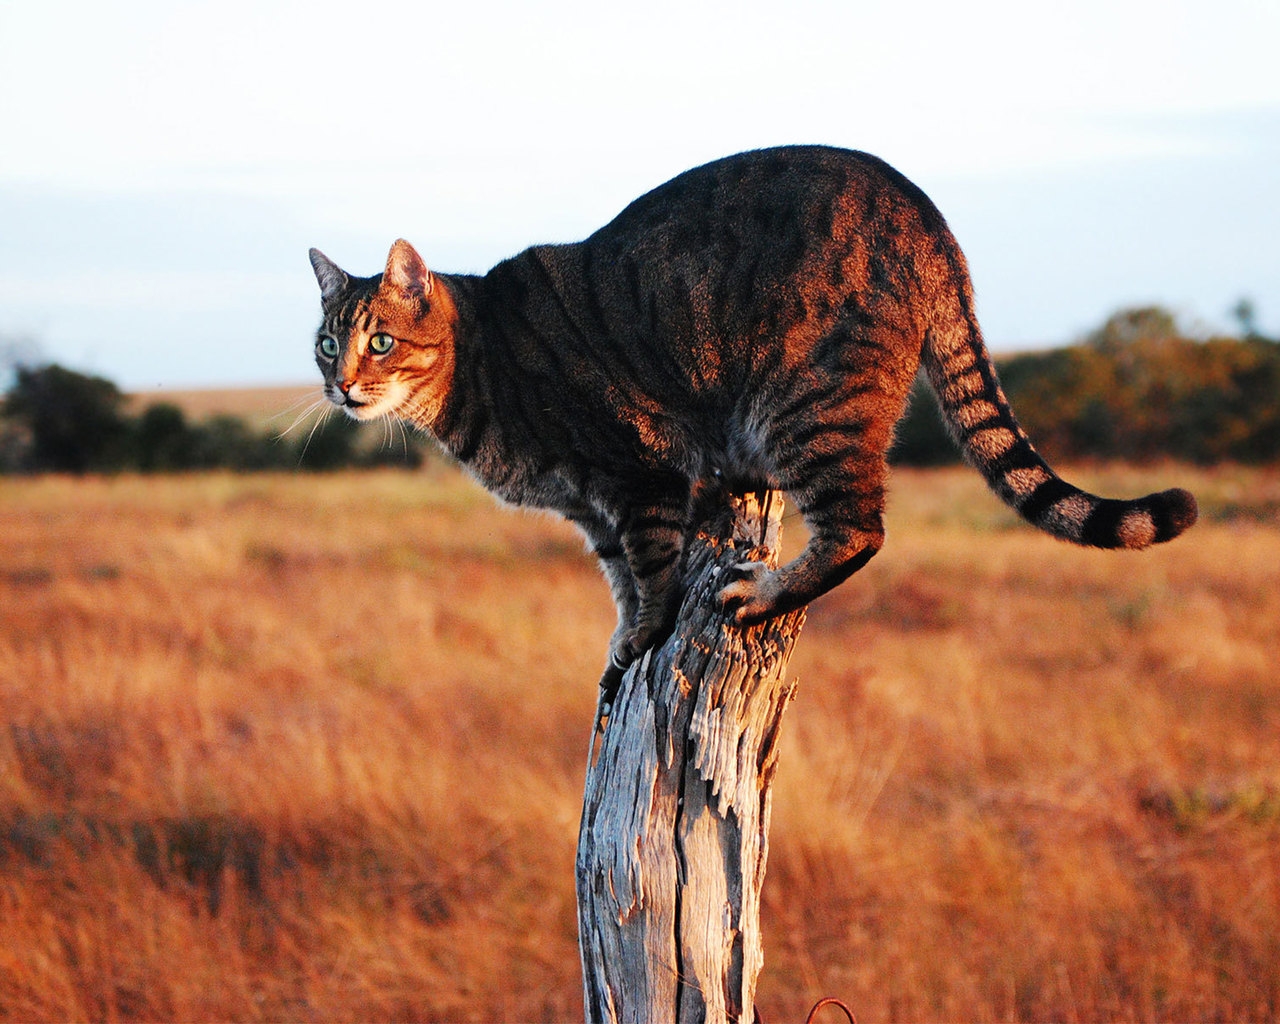 Savannah Cat on Stump for 1280 x 1024 resolution